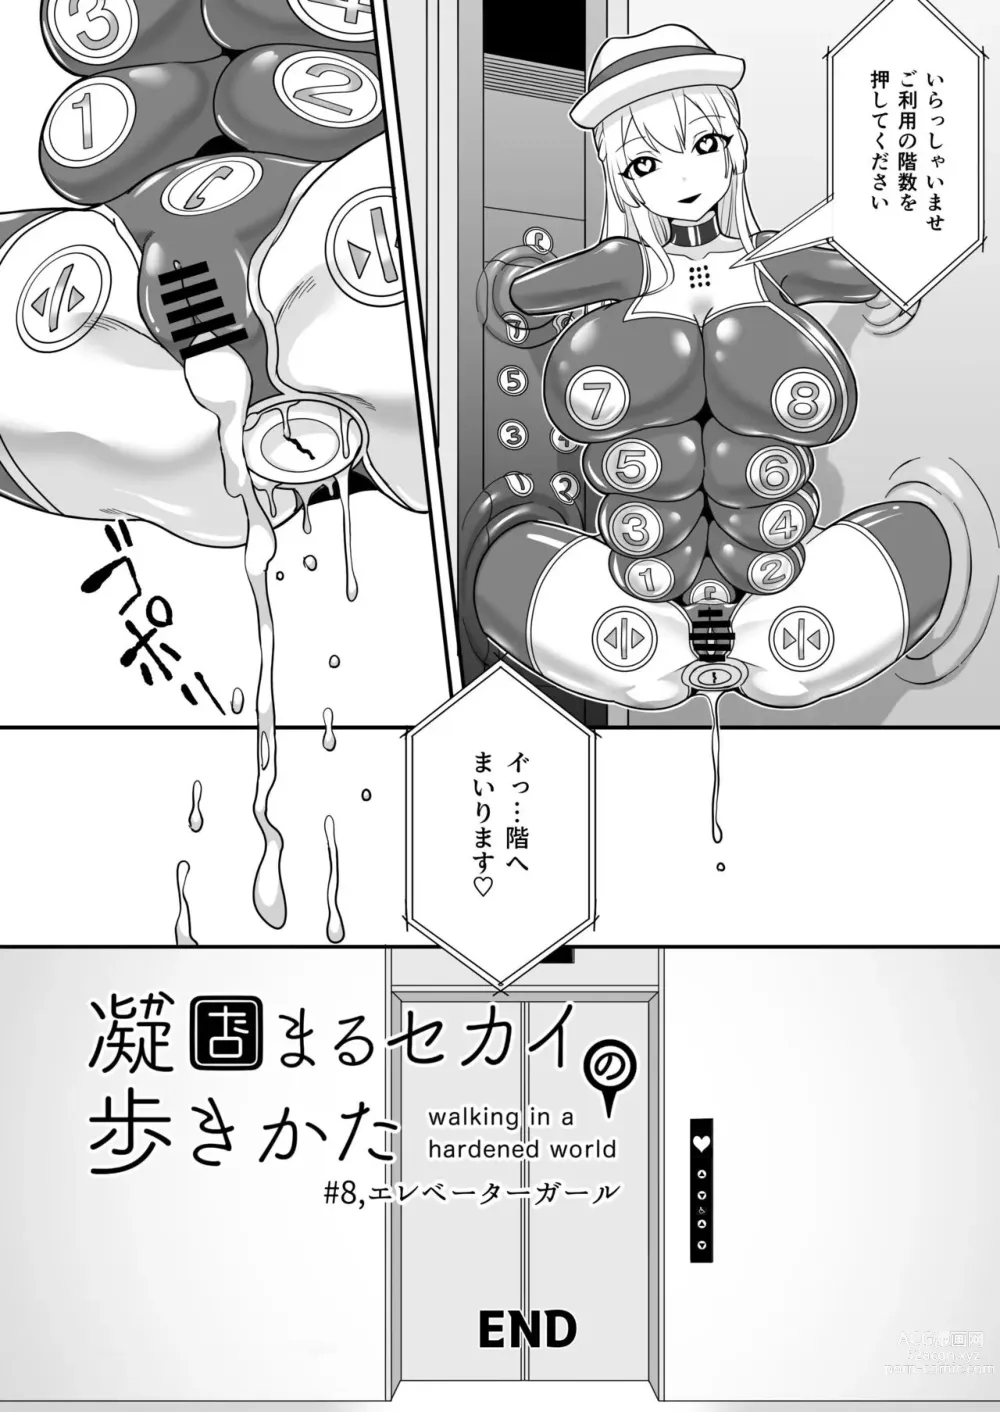 Page 13 of doujinshi Katamaru Sekai no Arukikata - walking in a hardened world #8